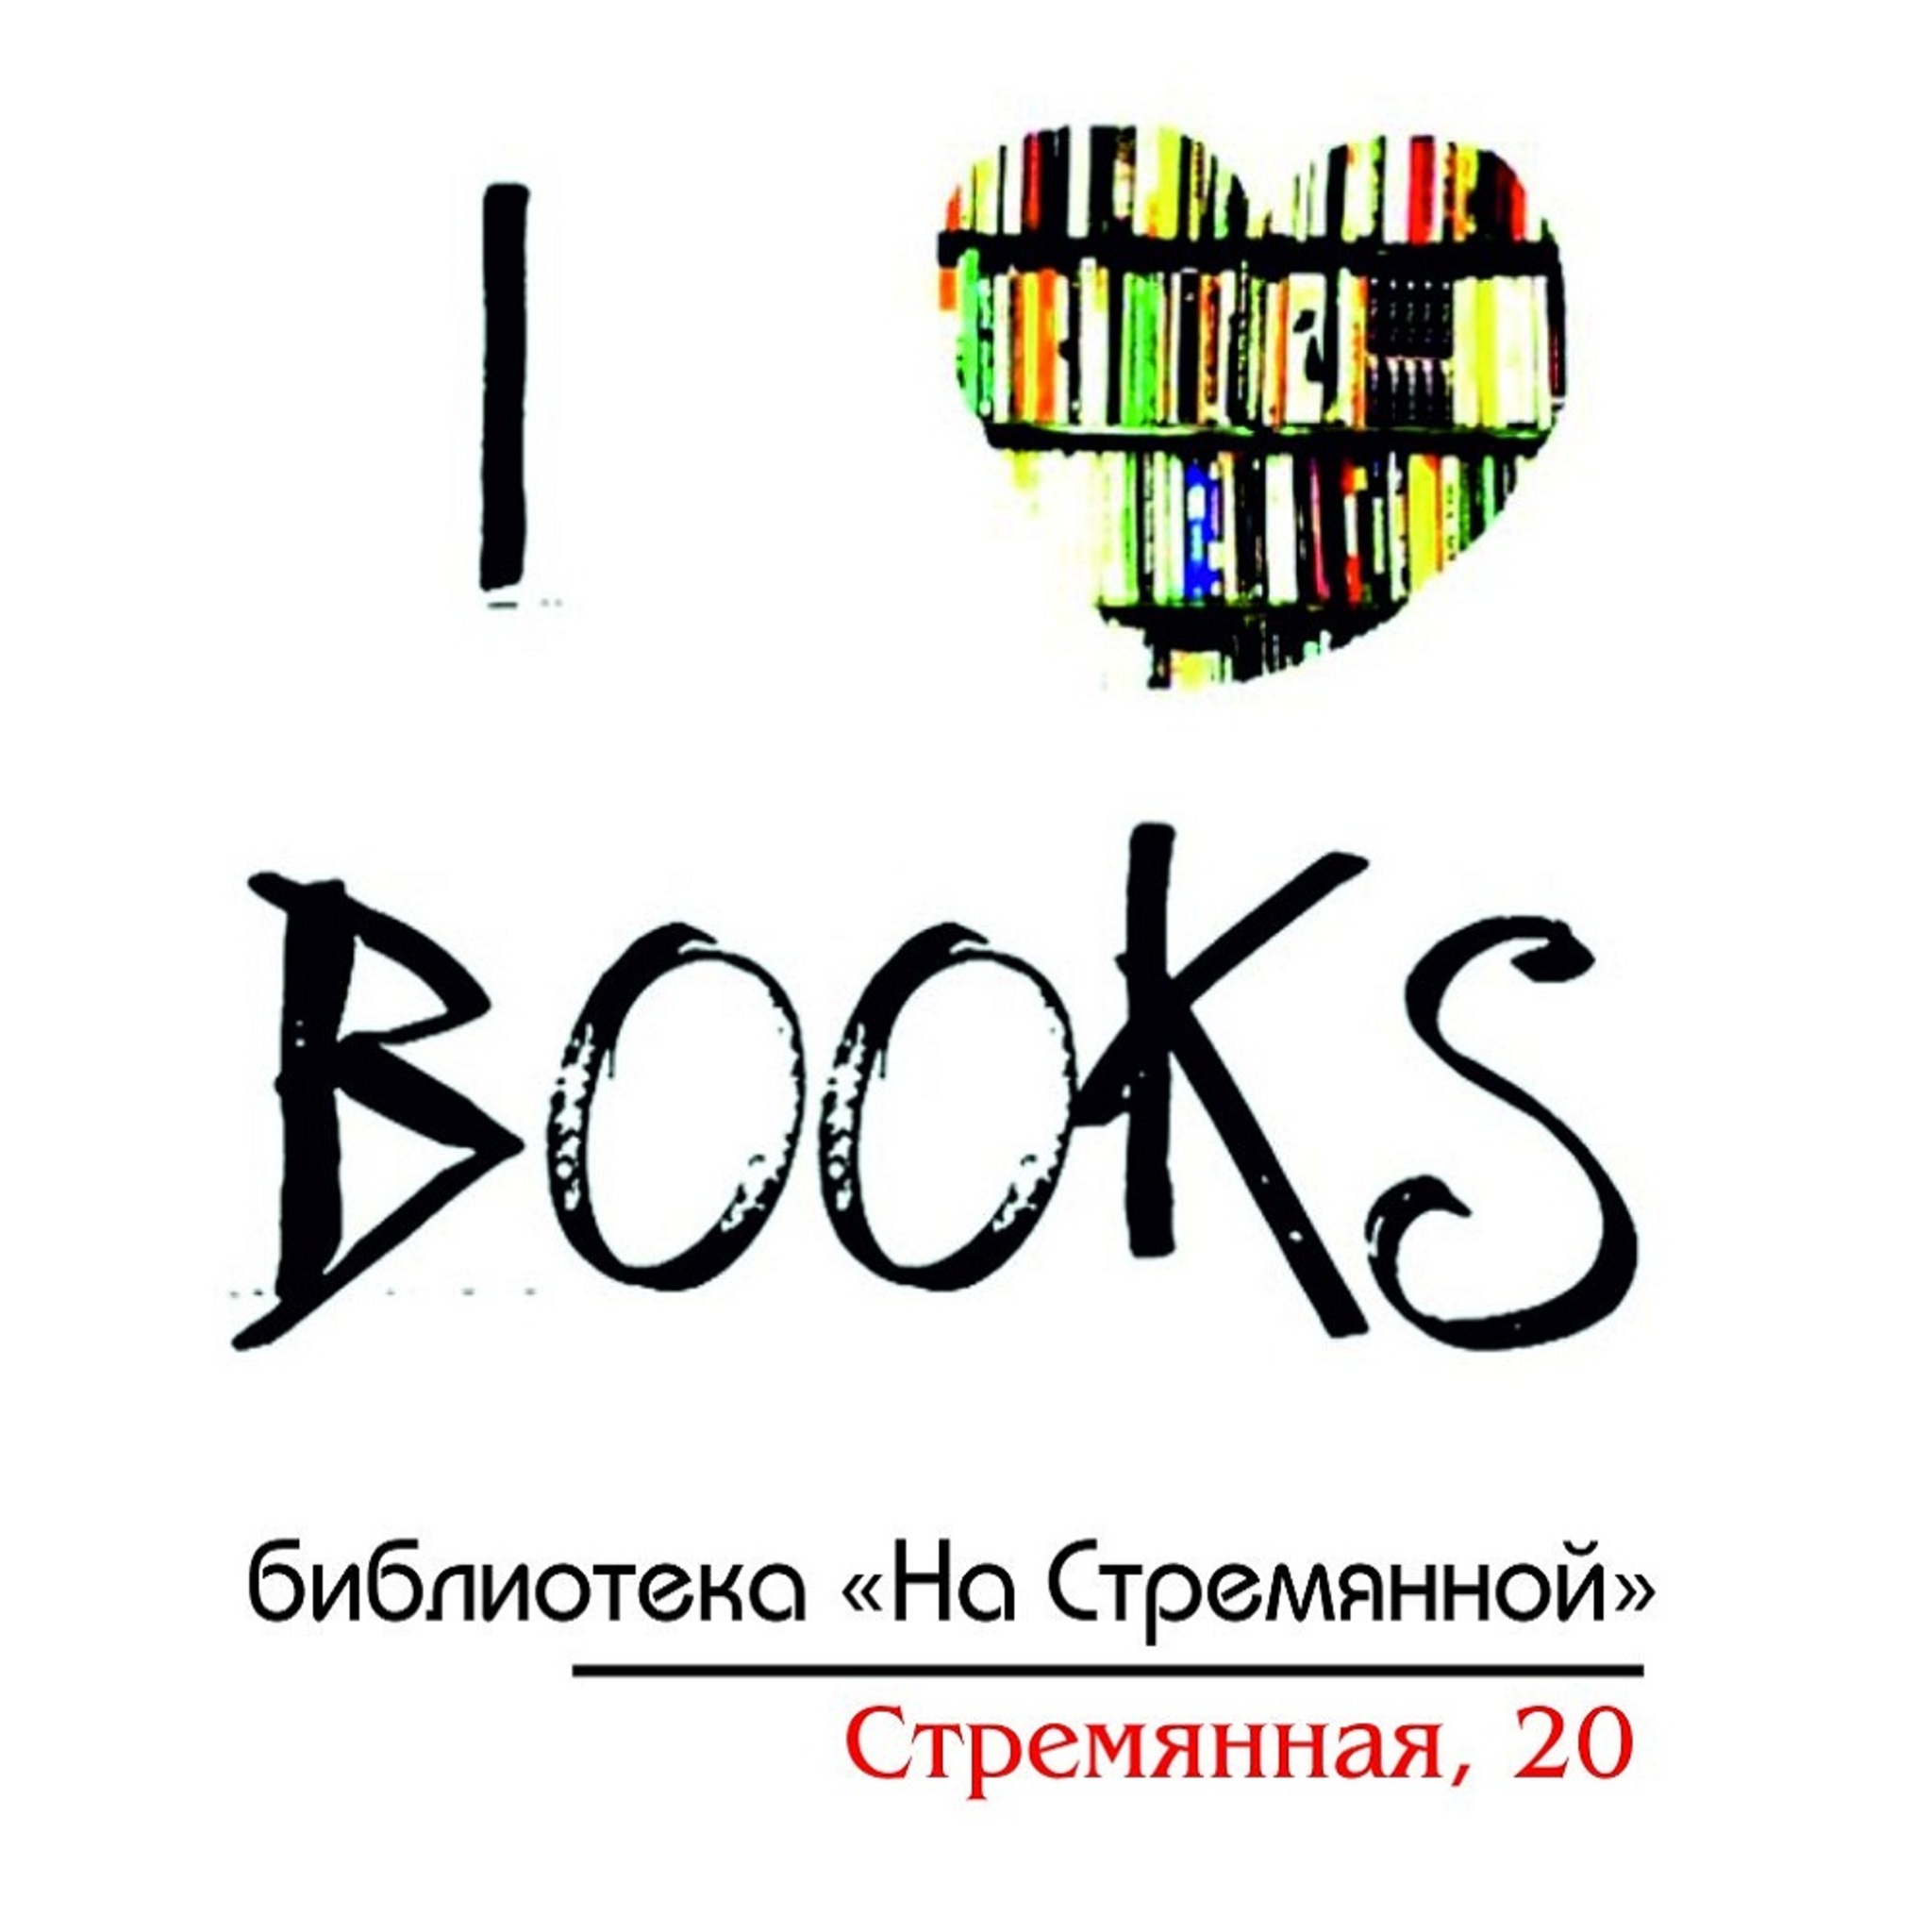 Library at Stremyannaya